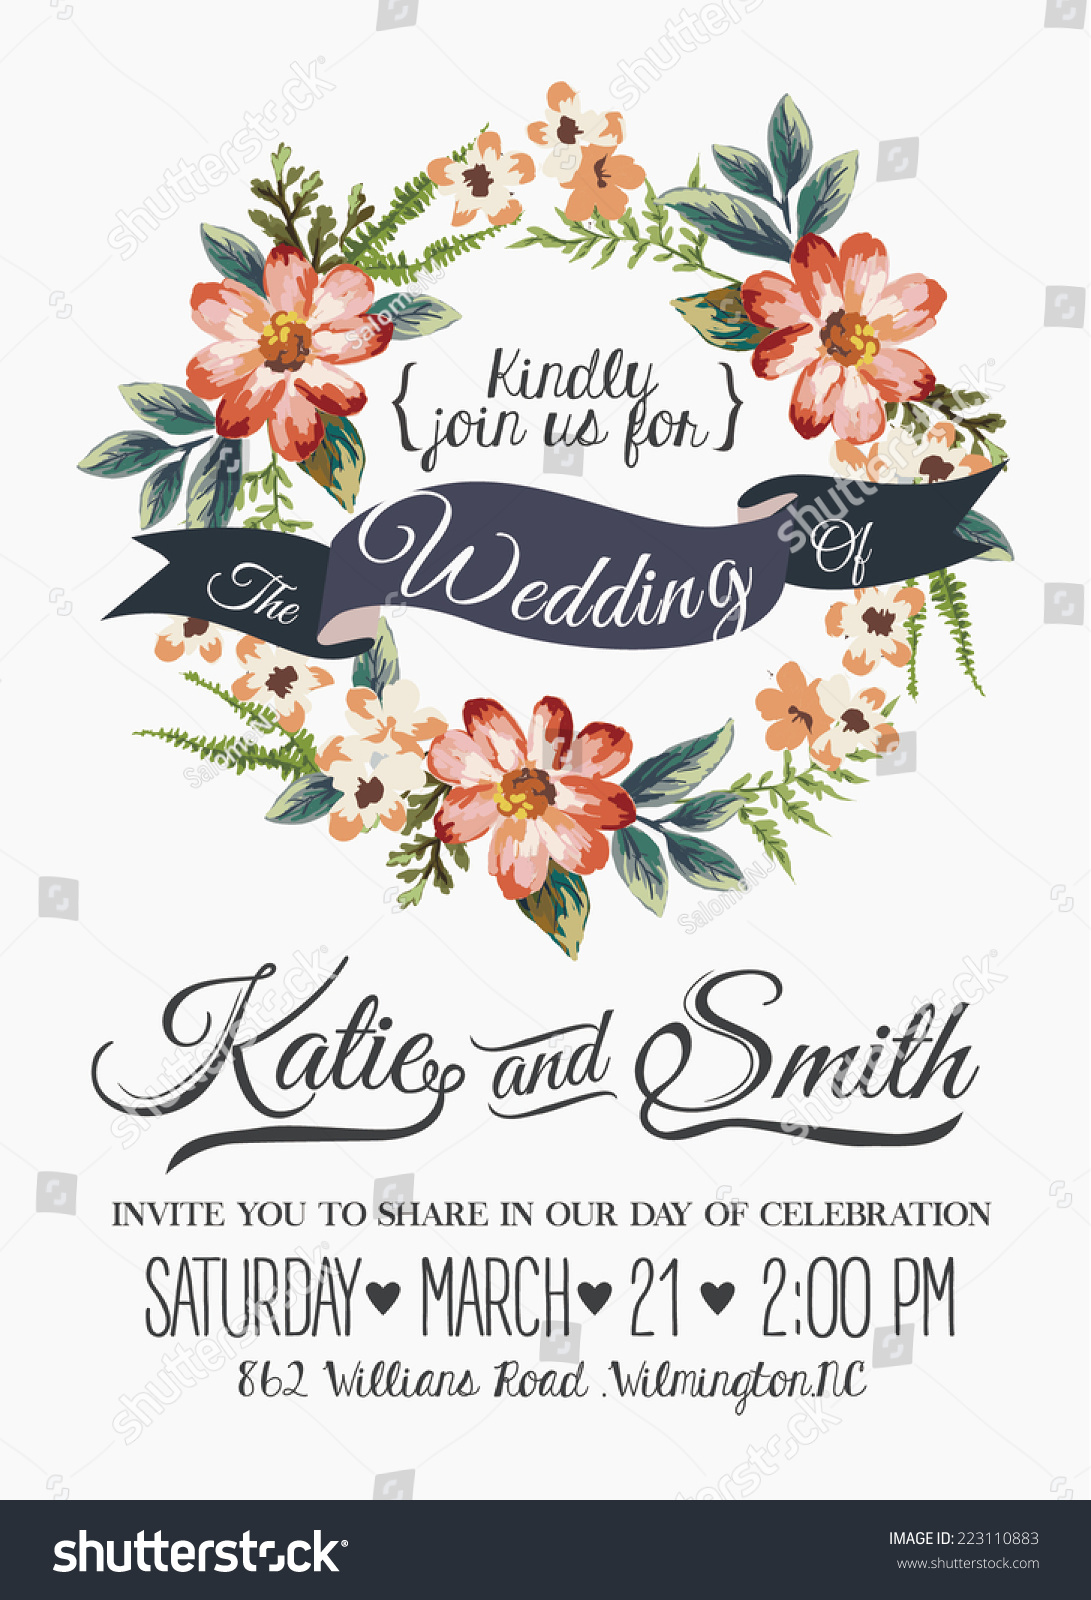 Wedding Invitation Card Romantic Flower Templates Stock Vector 223110883 - Shutterstock